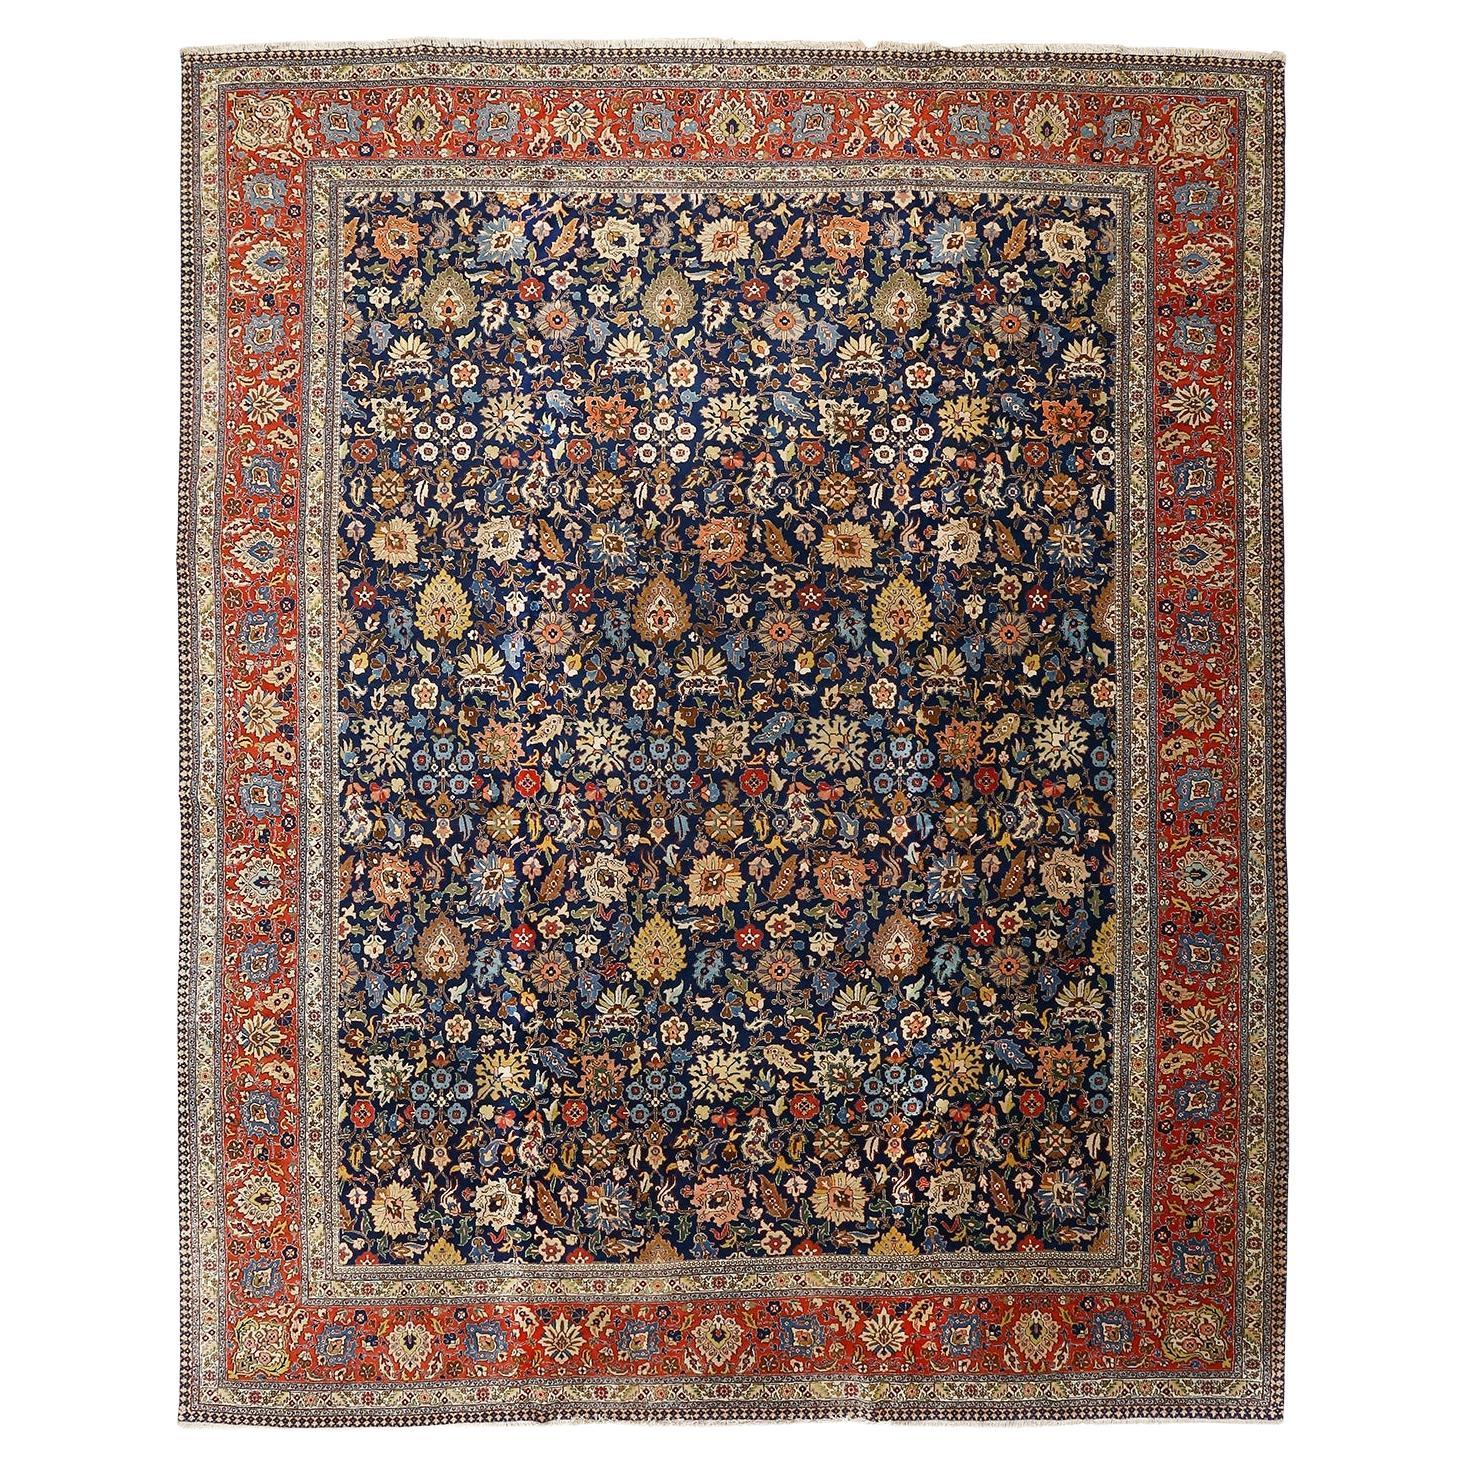 Collection Damoka Tabriz persane ancienne - Taille : 16 pieds 3 po. x 12 pieds 10 po.